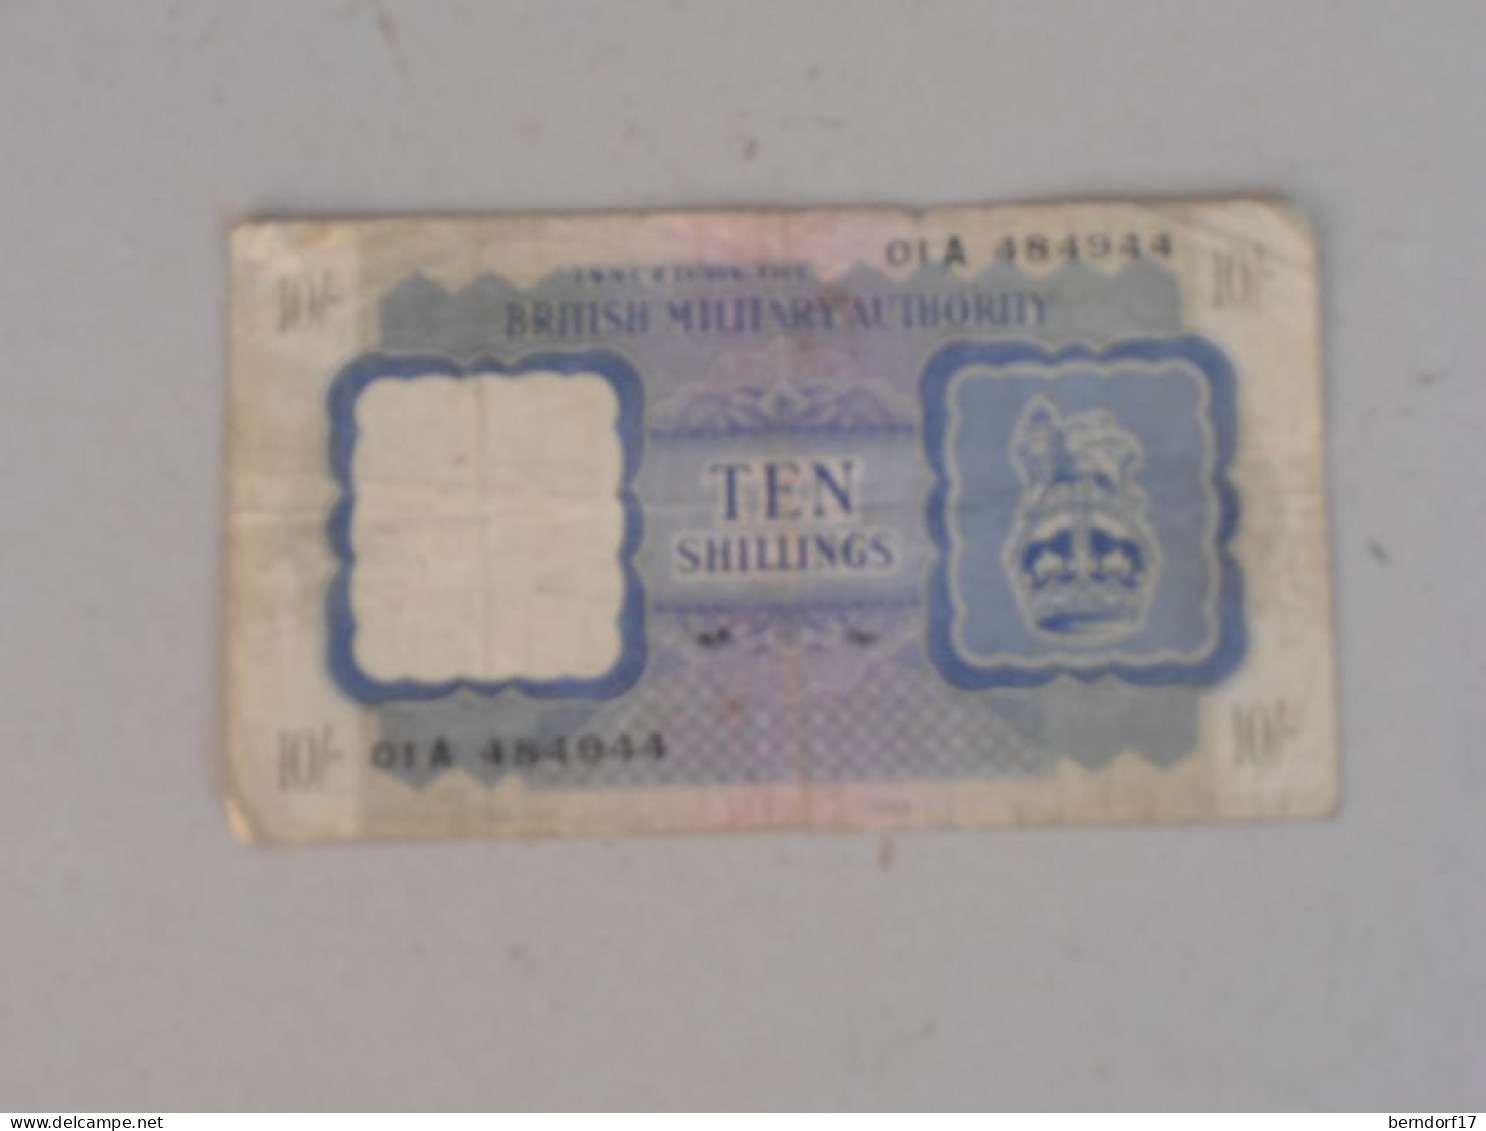 BRITSH MILITARY AUTHORITY - TEN SHILLINGS - 10 Shillings